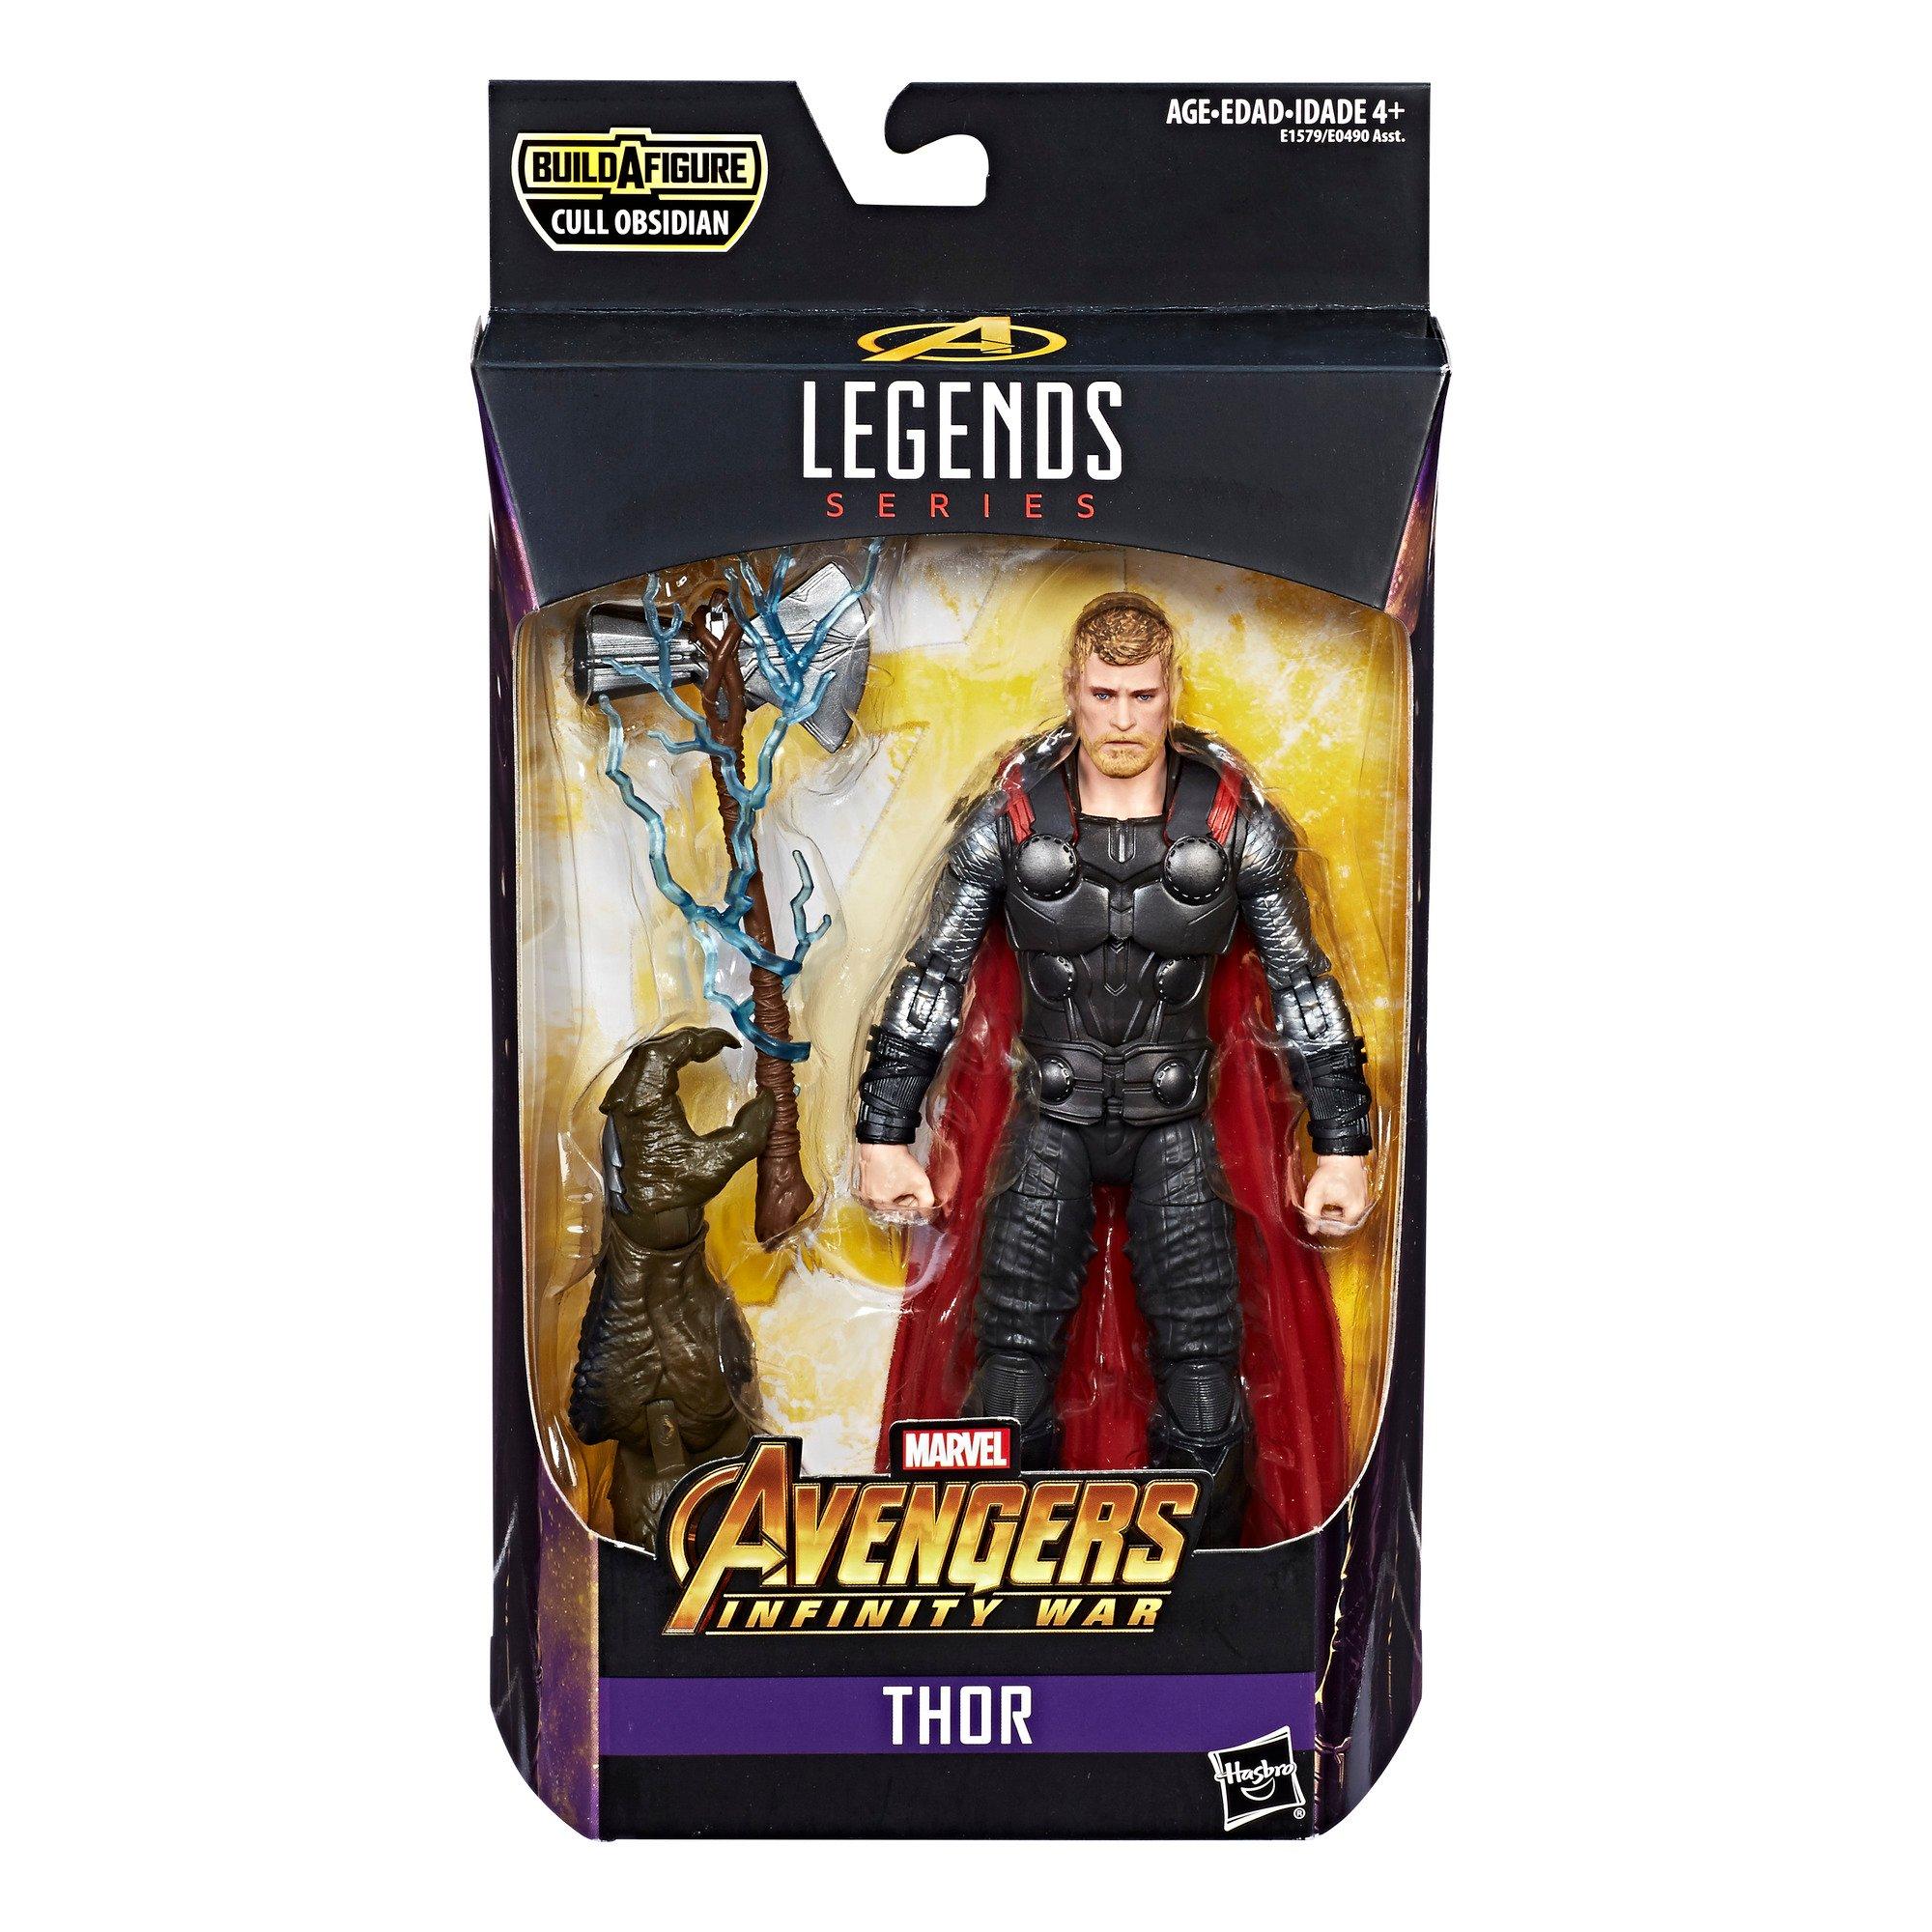 Marvel Legends Avengers Infinity War Endgame Super Hero Thor Action Figure Toy 